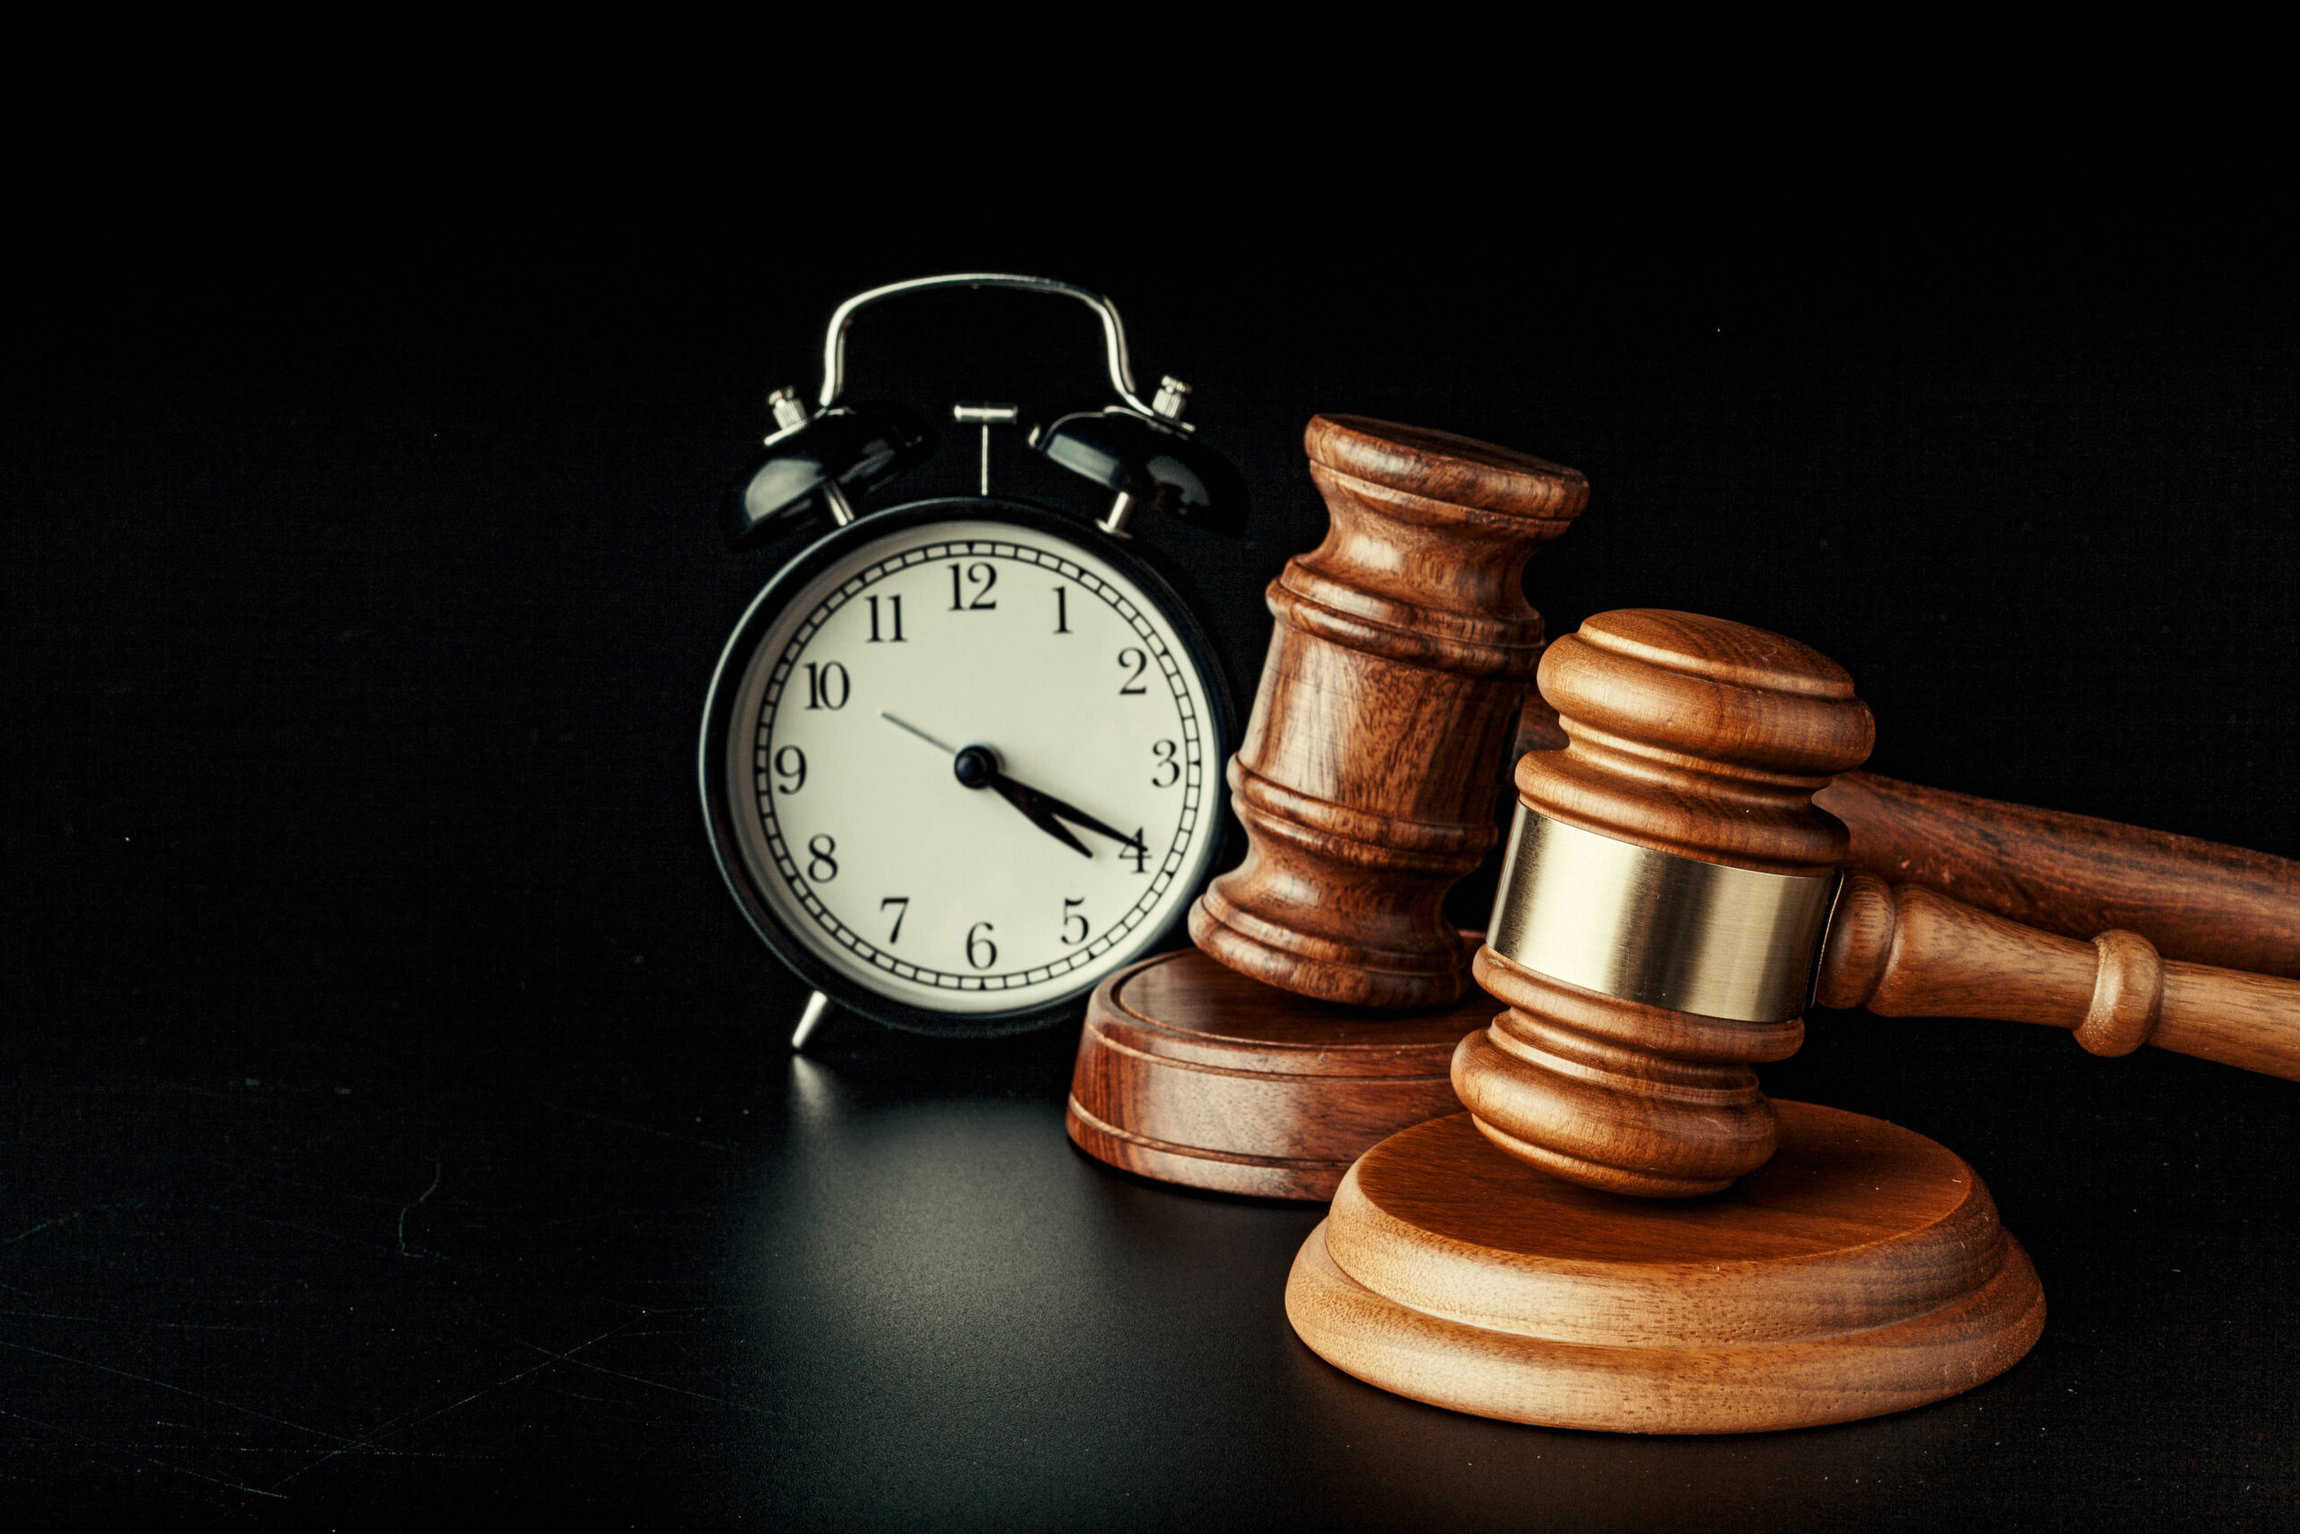 Wooden judge hammer with alarm clock on black background